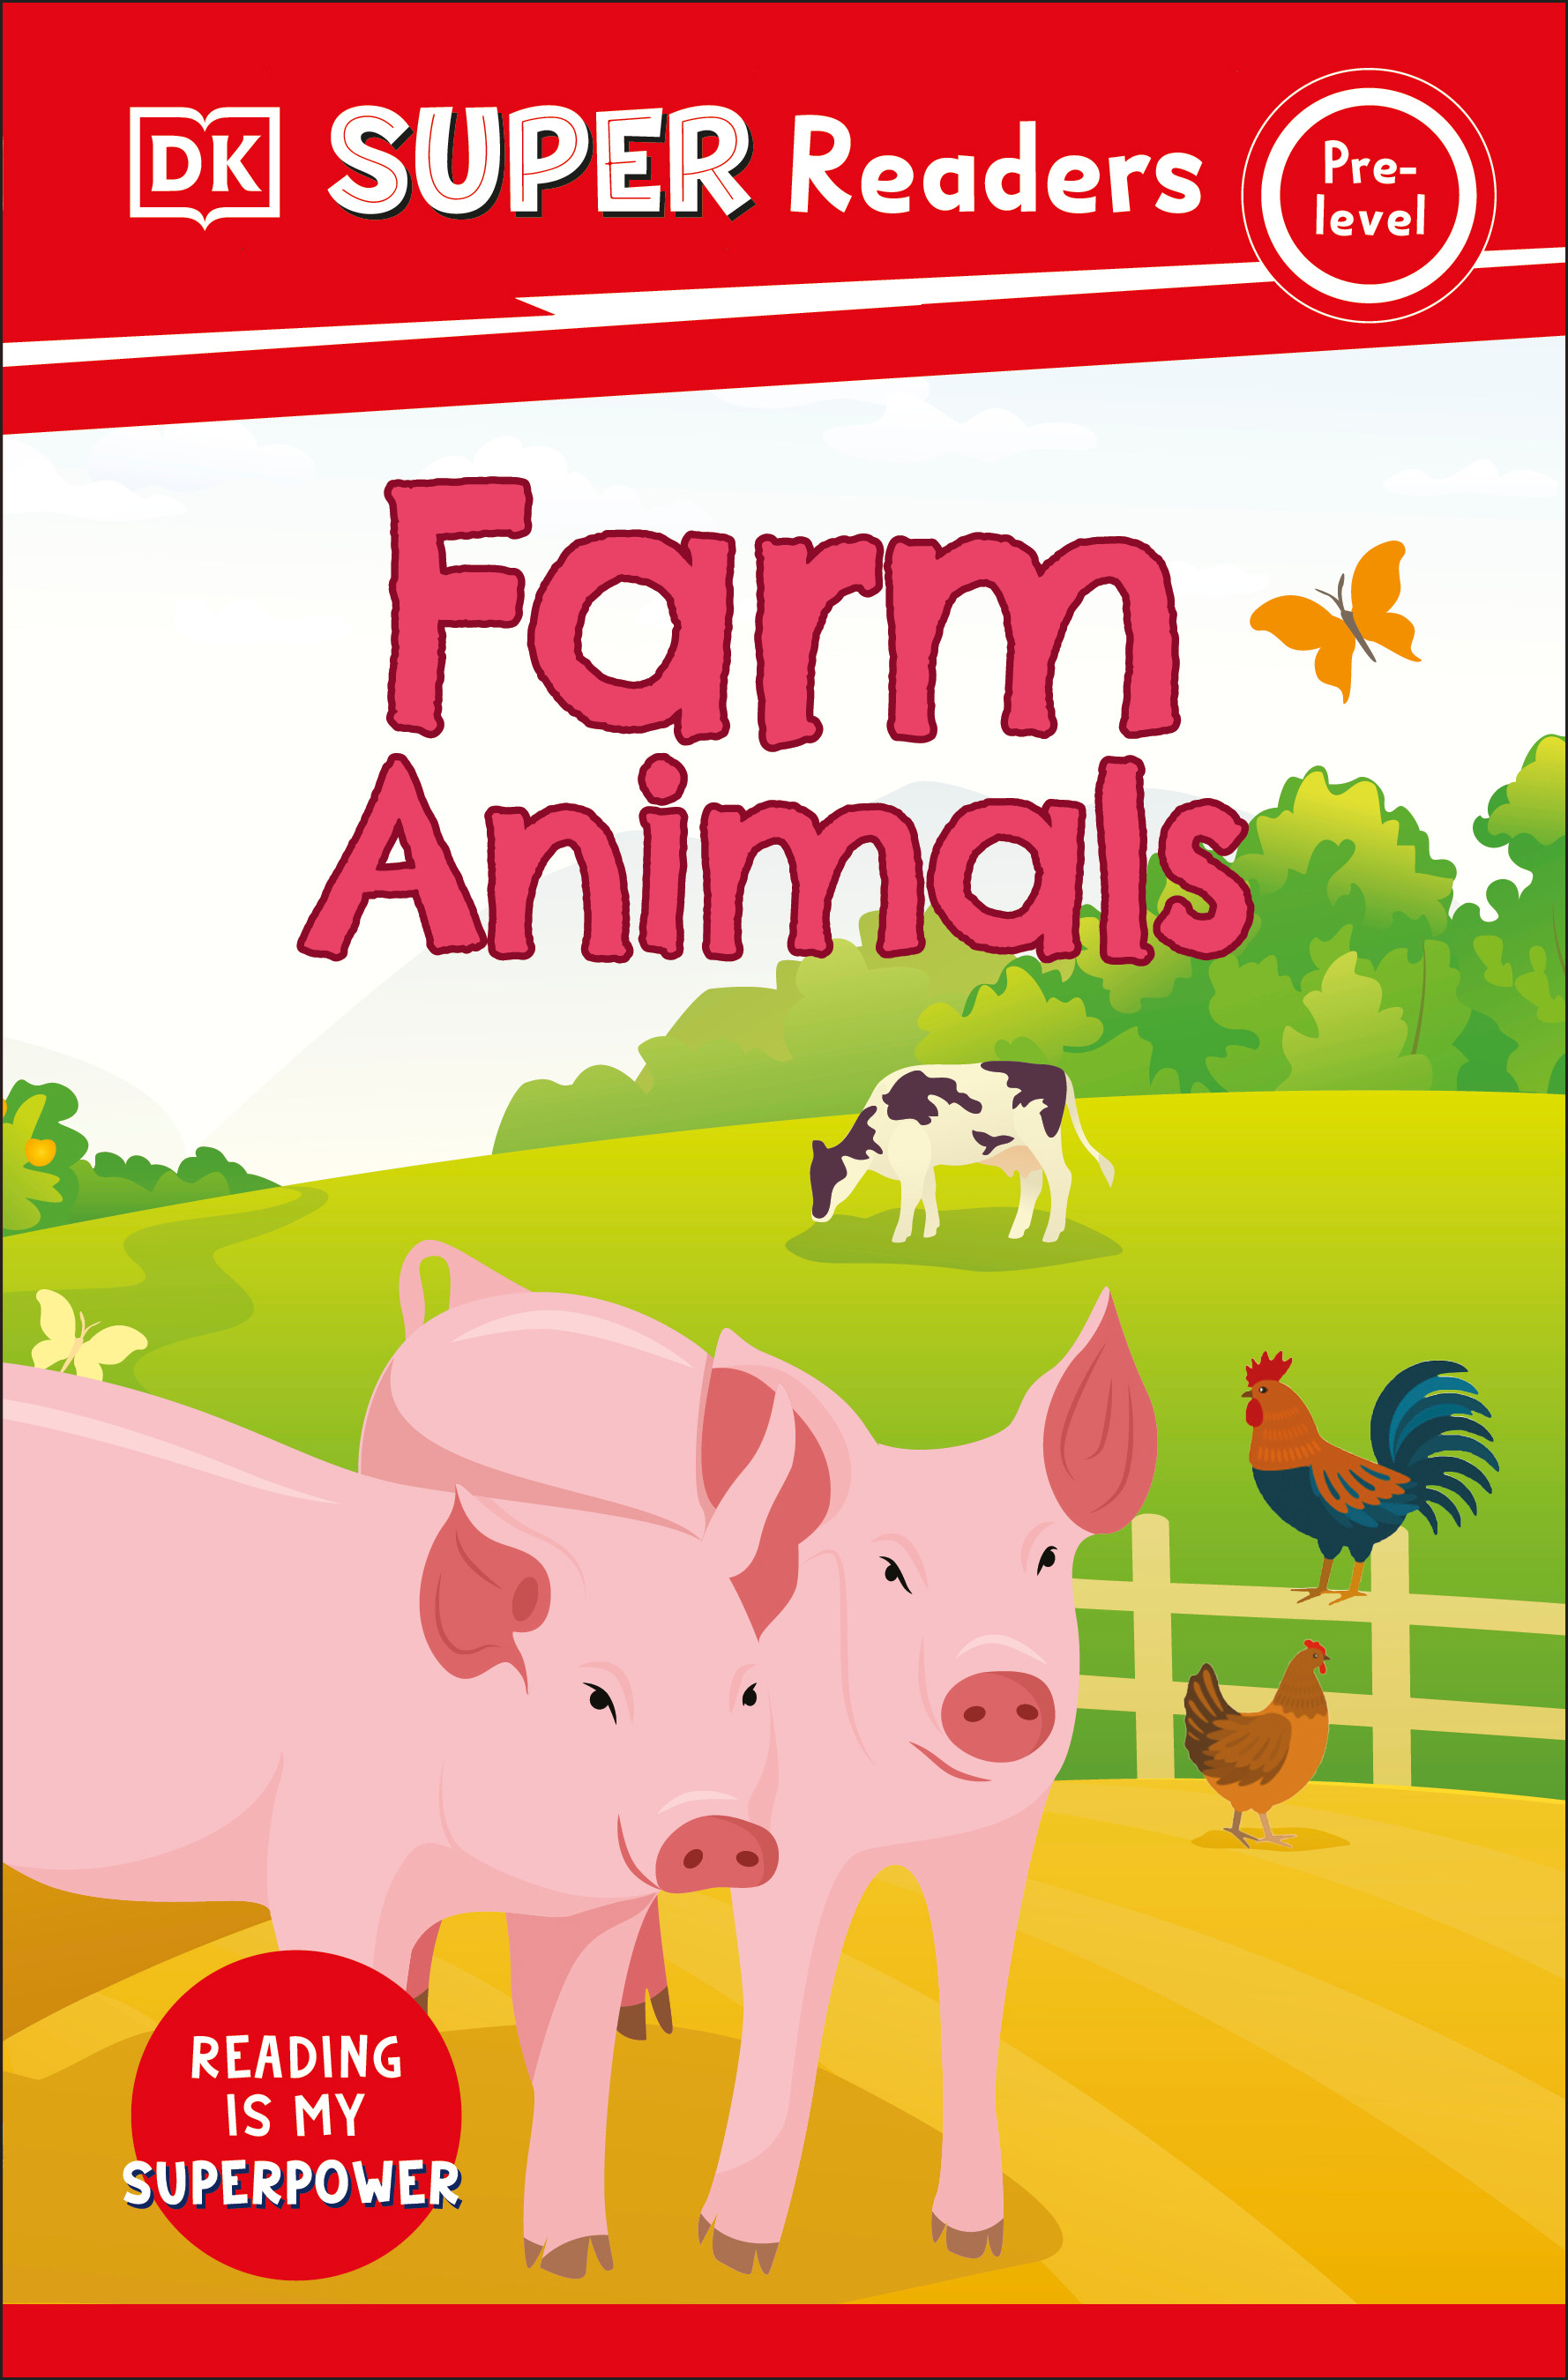 DK Super Readers Pre-Level - Farm Animals | 